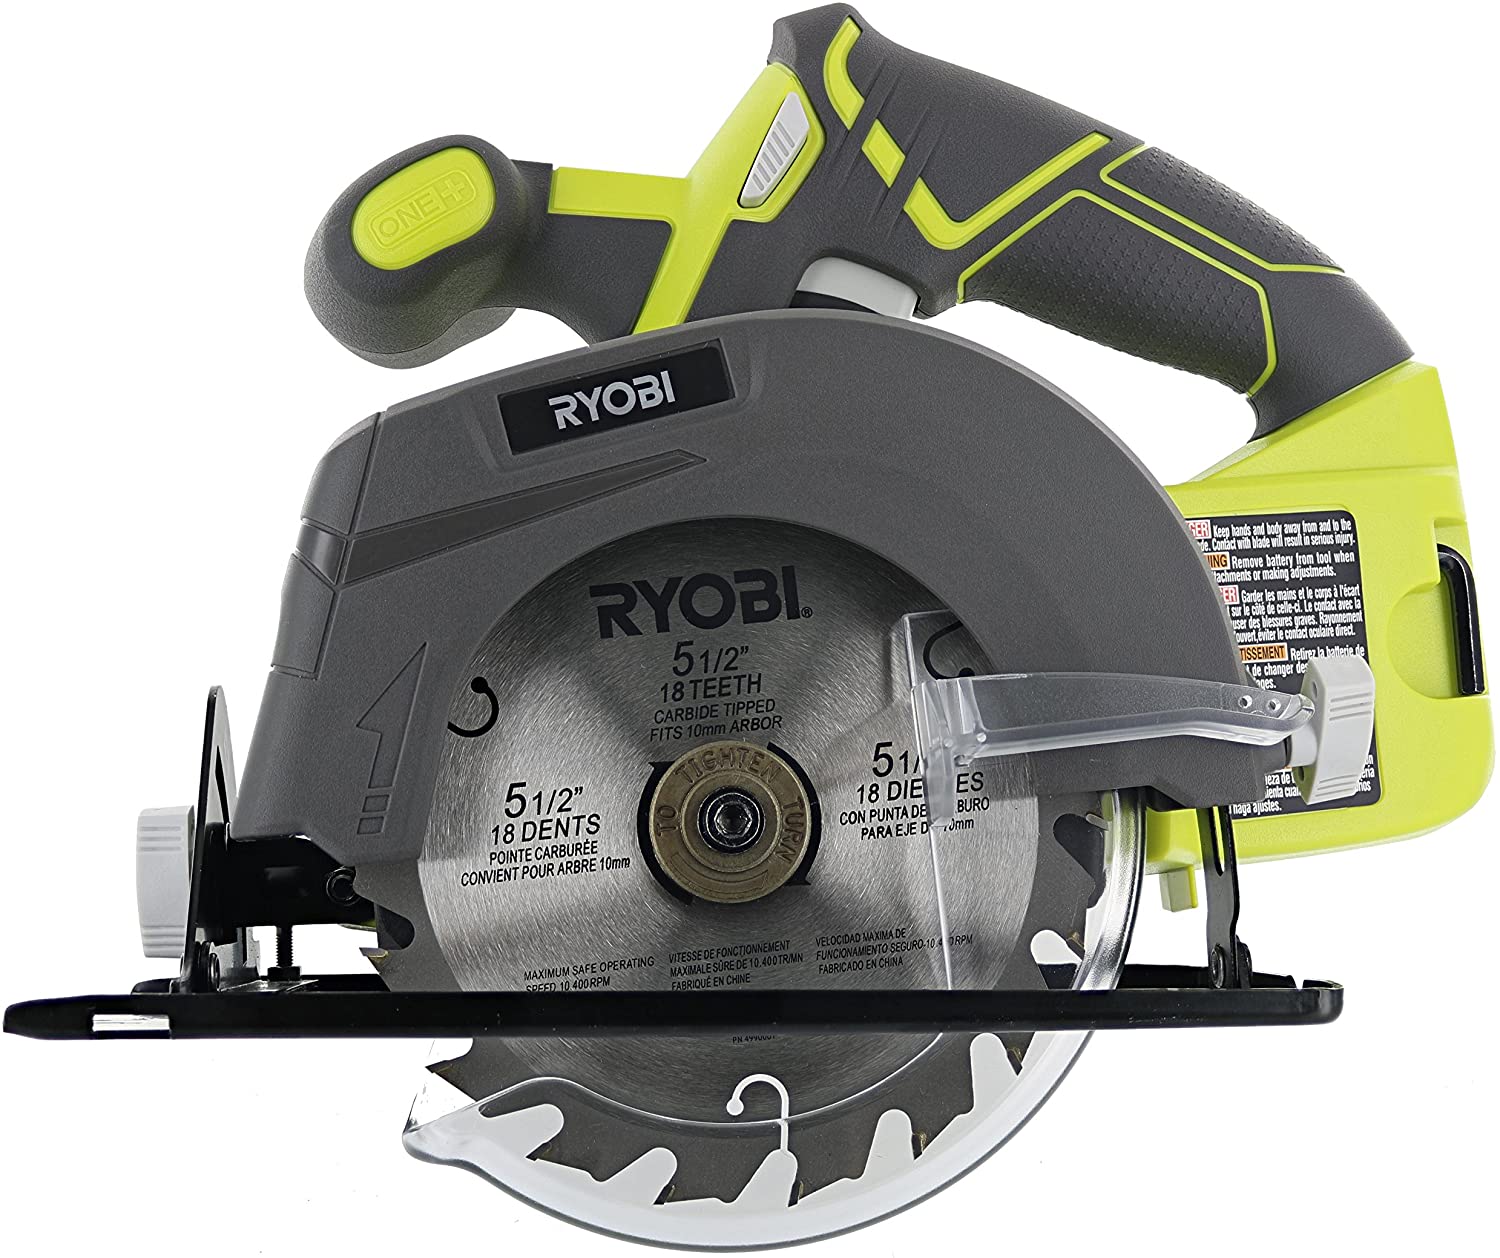 RYOBI One P505 Battery Powered Circular Saw, 5.5-Inch